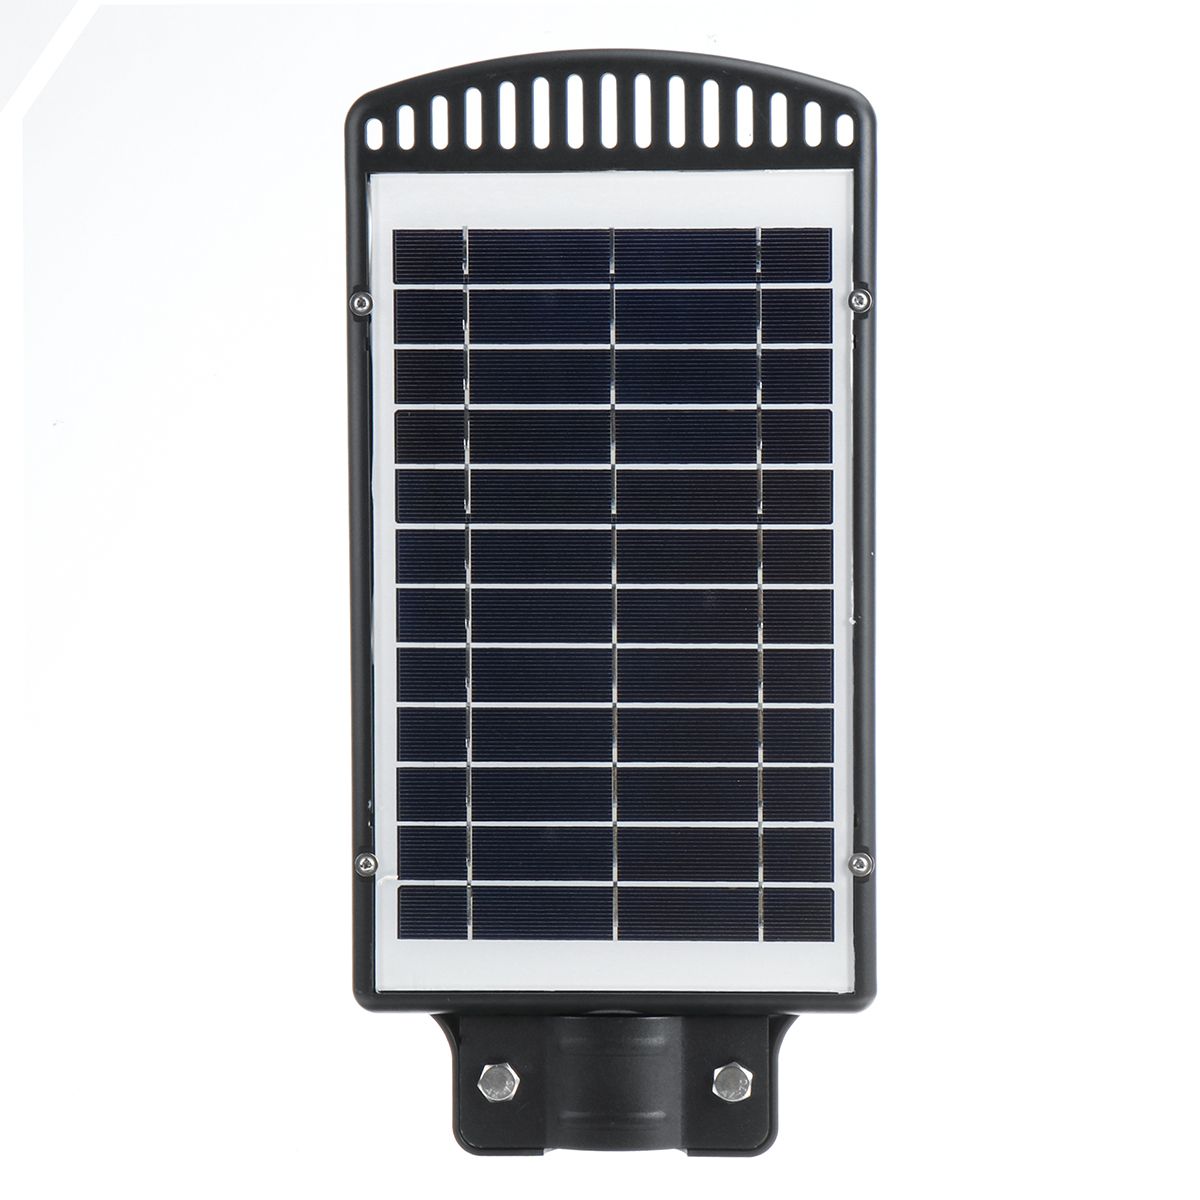 Solar-Panel-192384576LED-Wall-Street-Light-Outdoor-Garden-Lamp-wirh-Remote-Controller-1596569